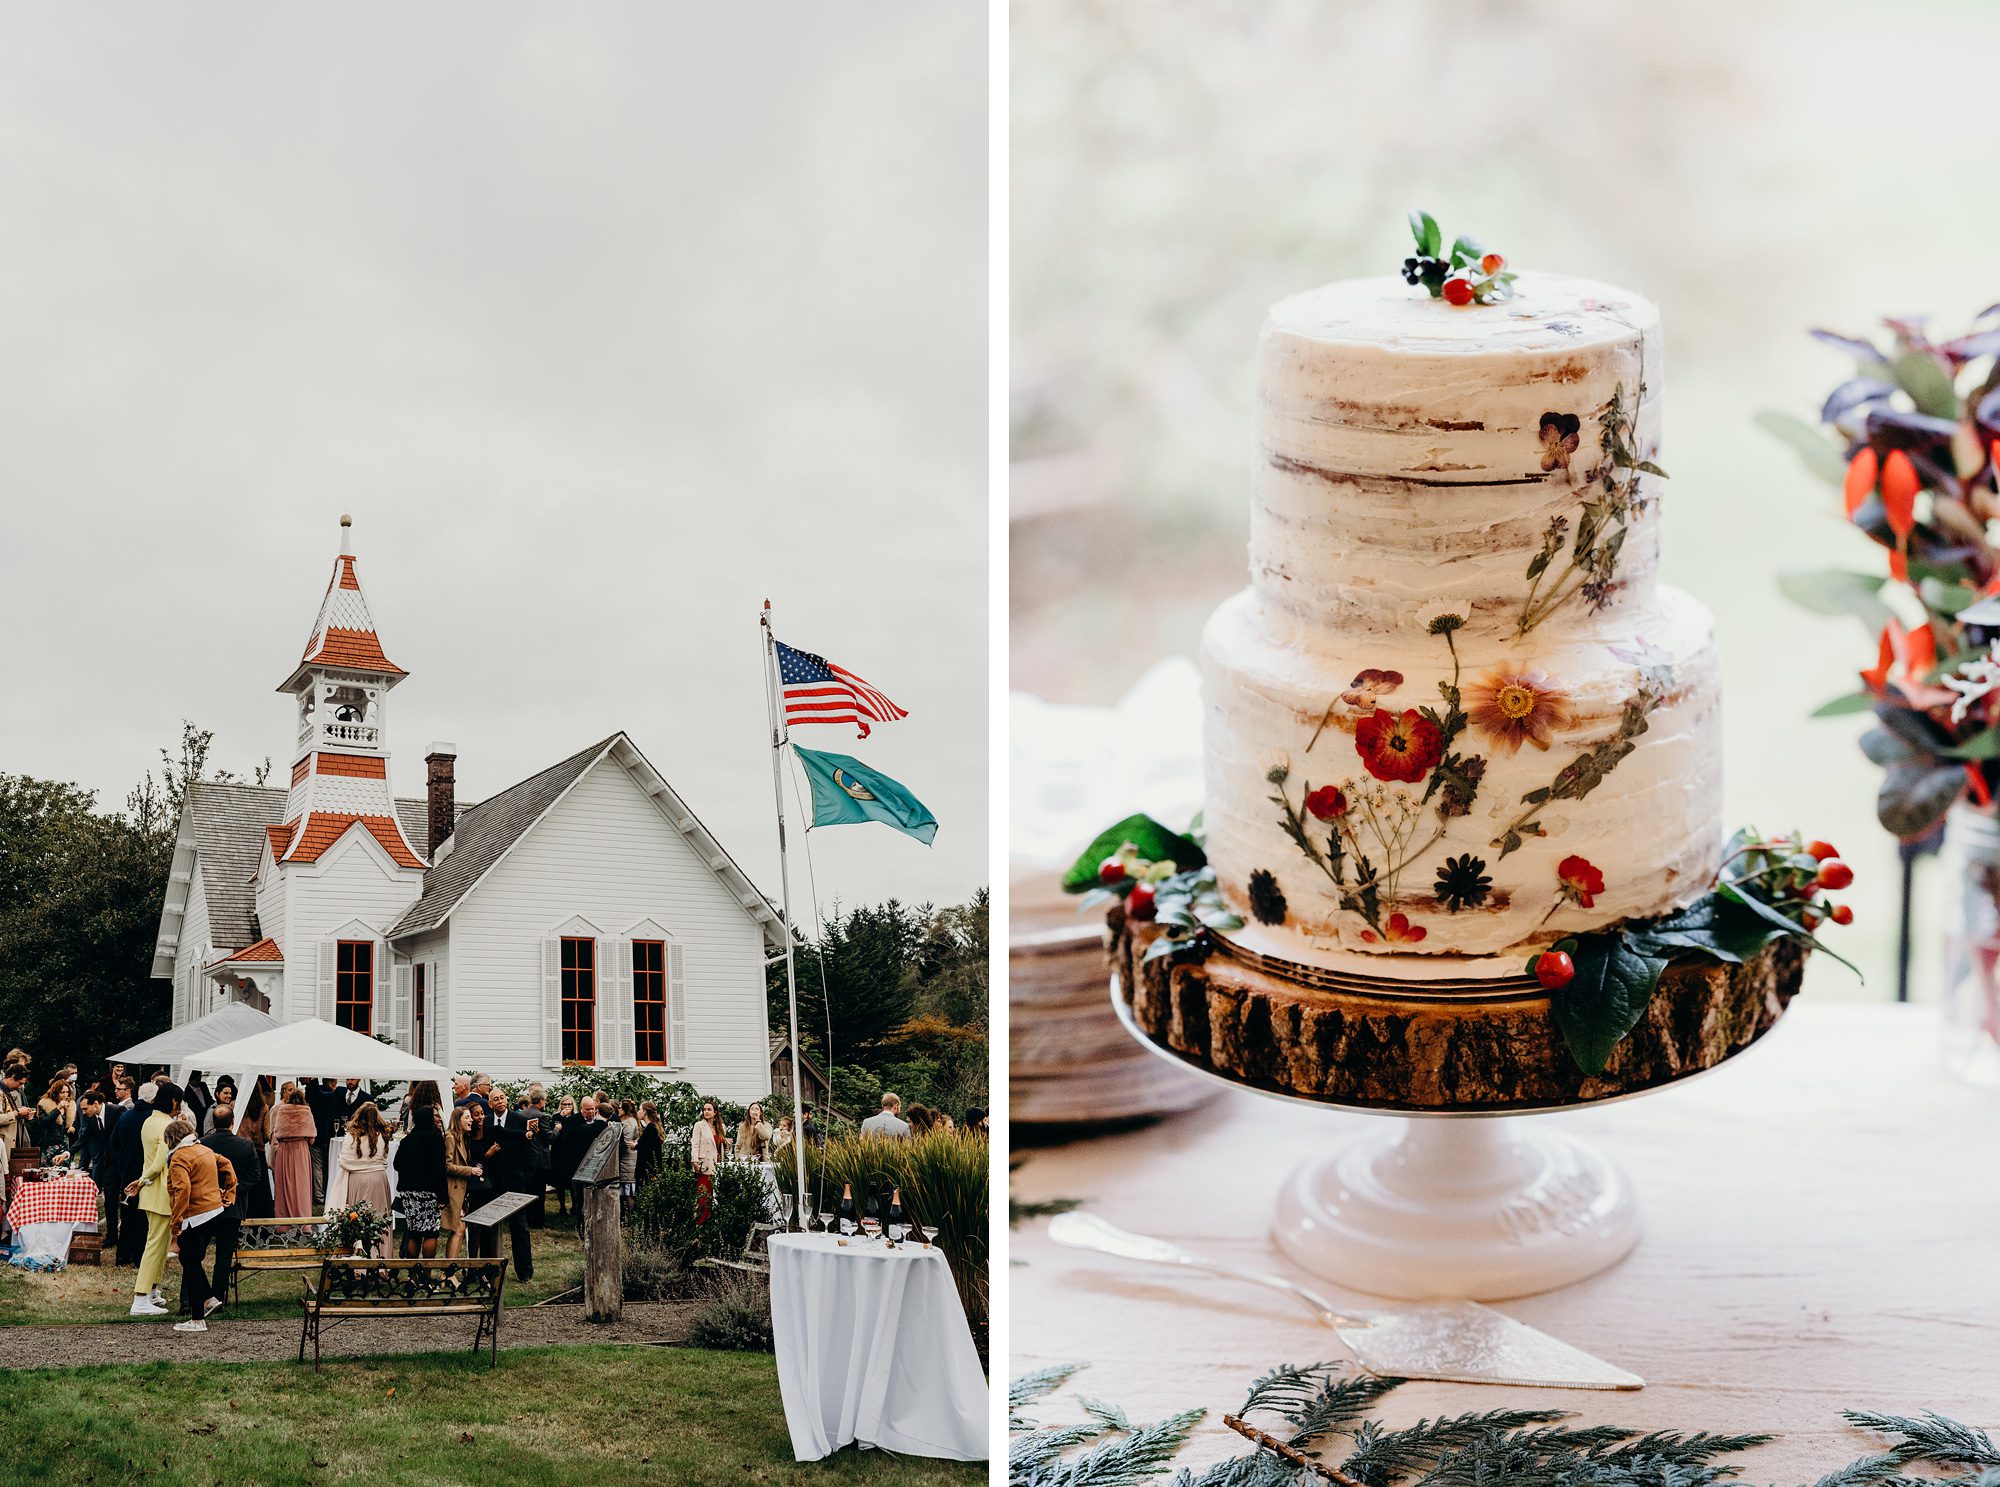 Long Beach Peninsula Wedding Reception Details by Briana Morrison Photography